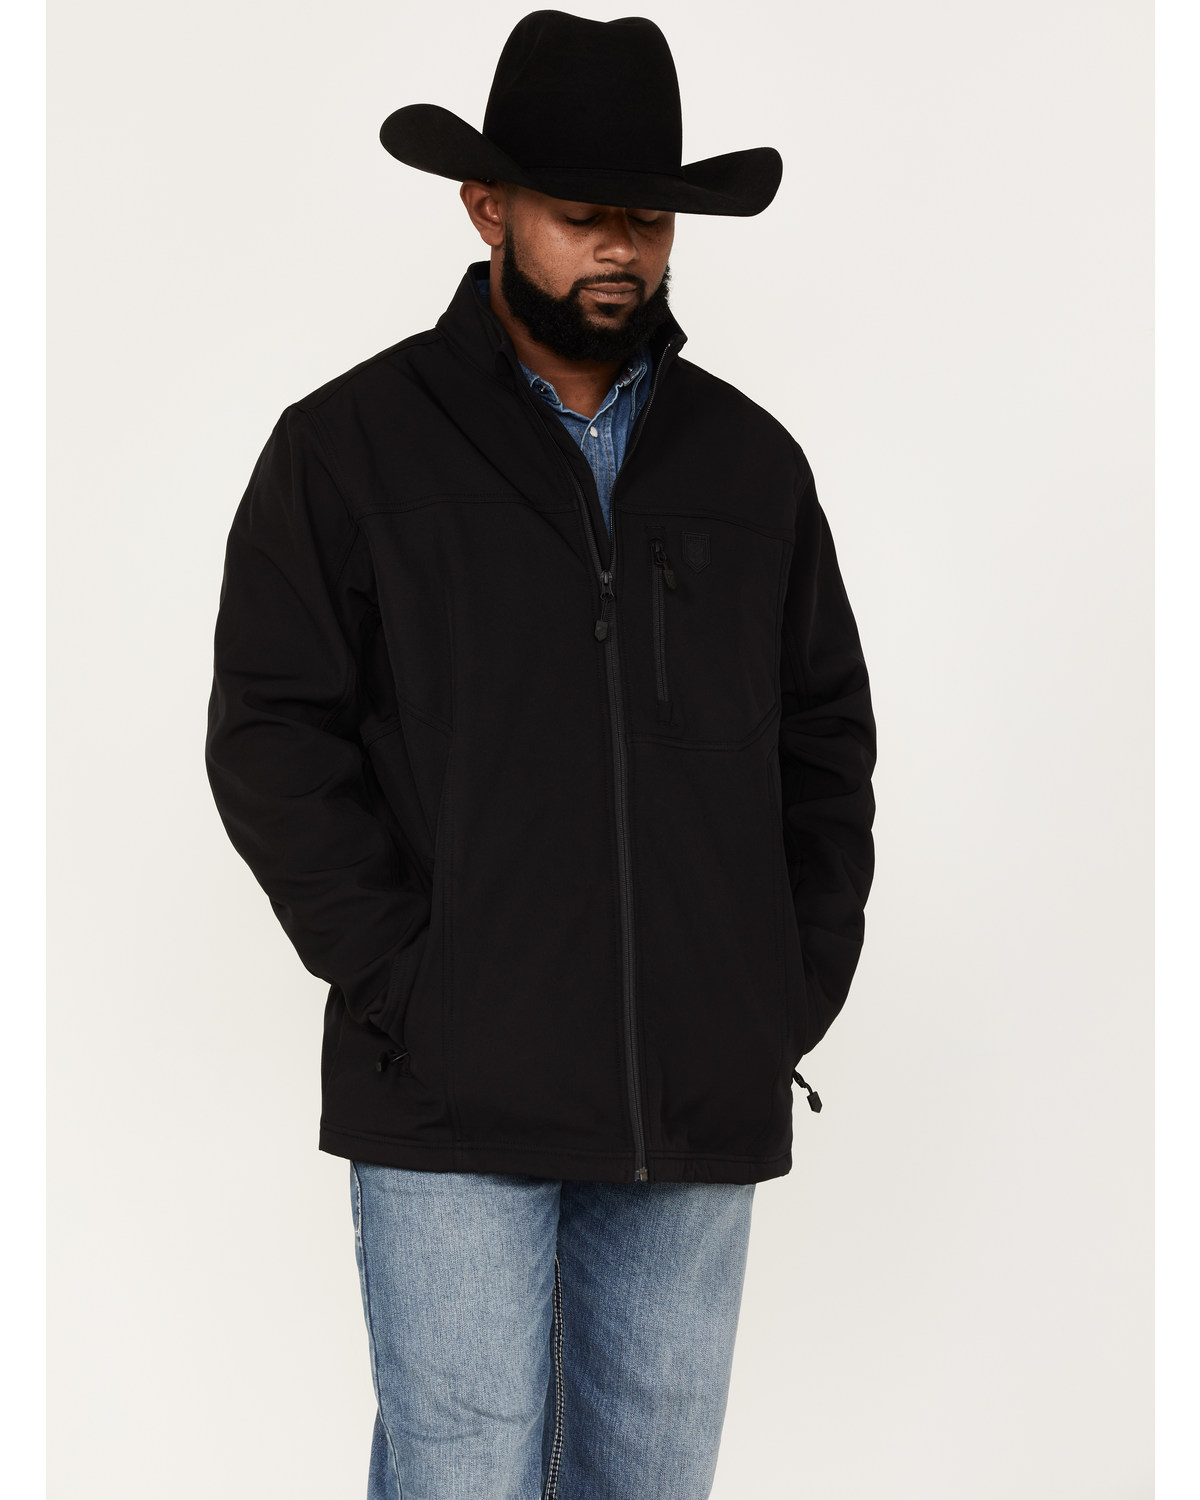 RANK 45® Men's Myrtis Concealed Carry Softshell Jacket